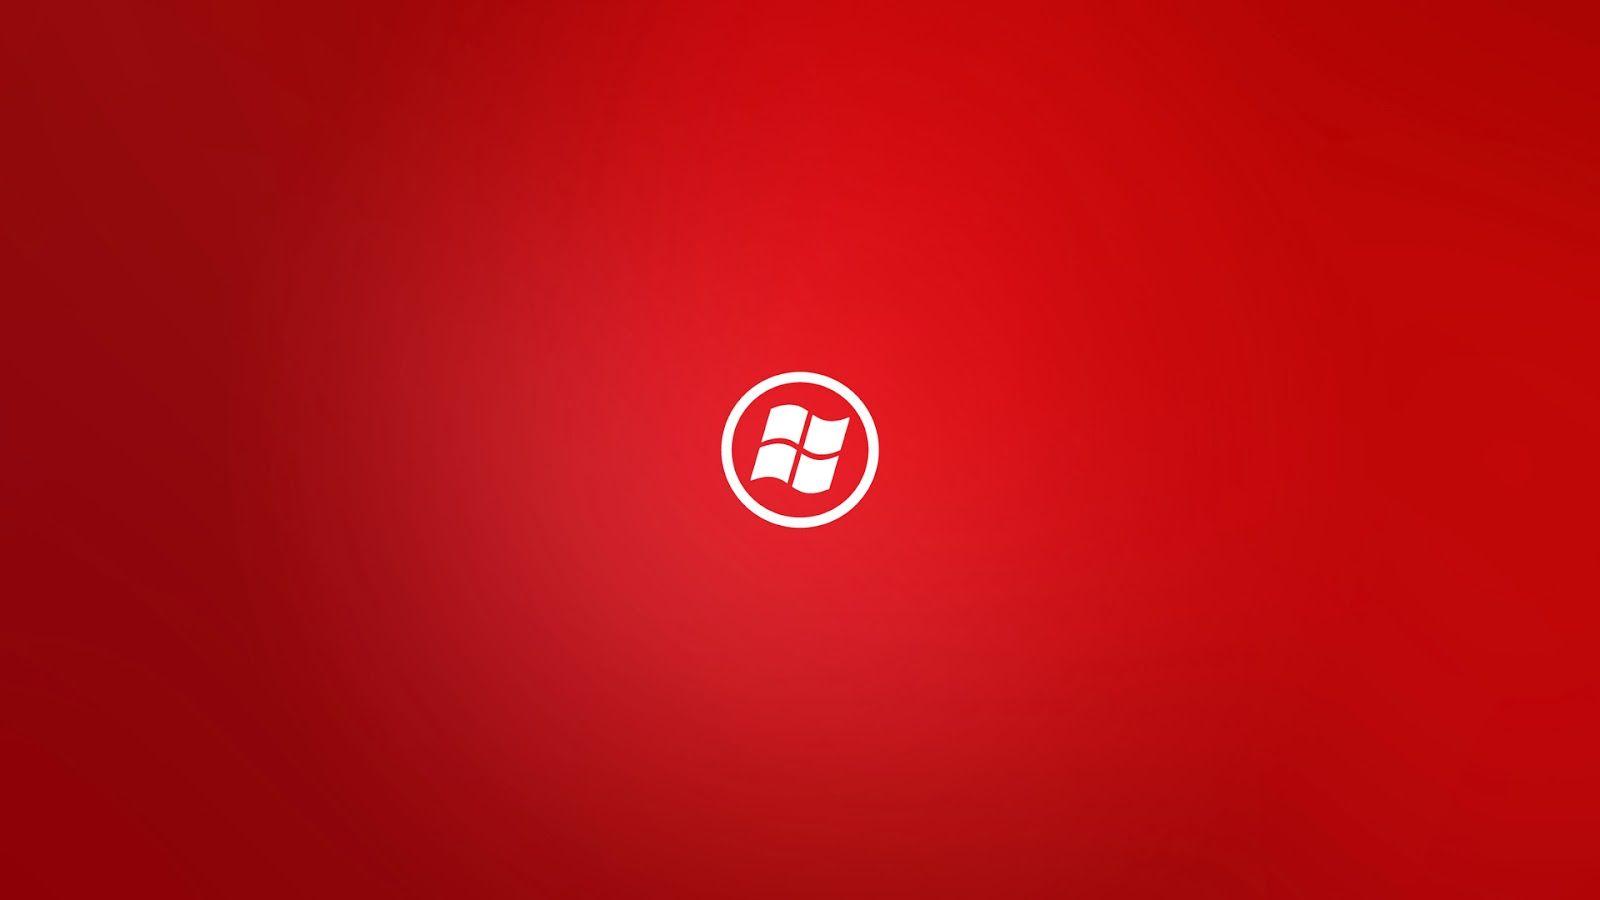 HD wallpaper: Windows 7 Wallpaper Red. Windows wallpaper, Red windows, System wallpaper